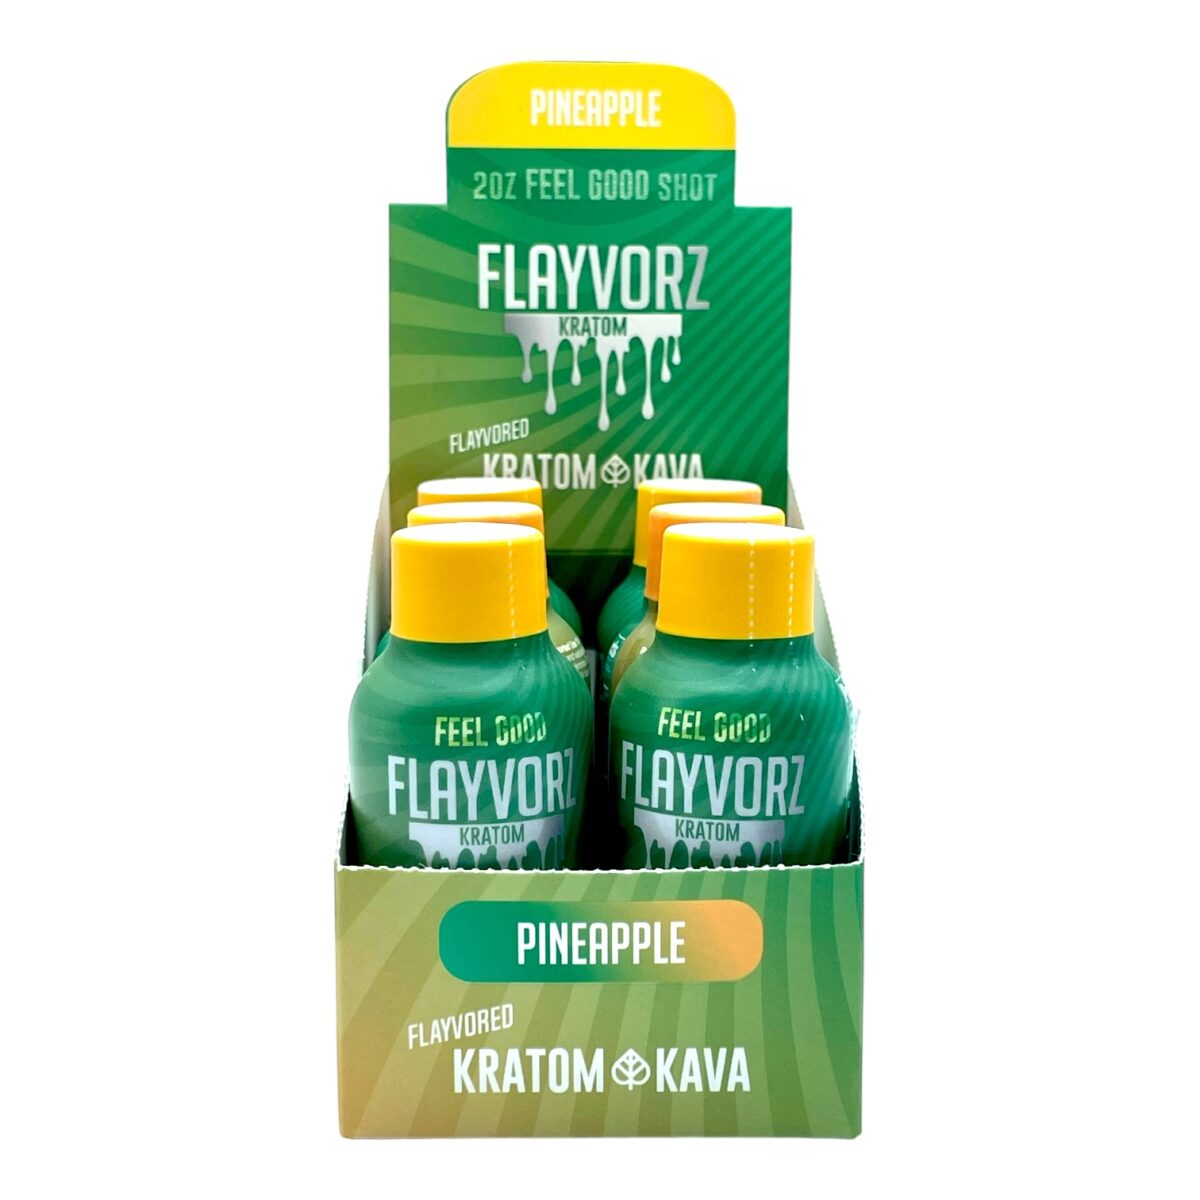 Flayvorz Kratom Kava Pineapple Shot – 2oz